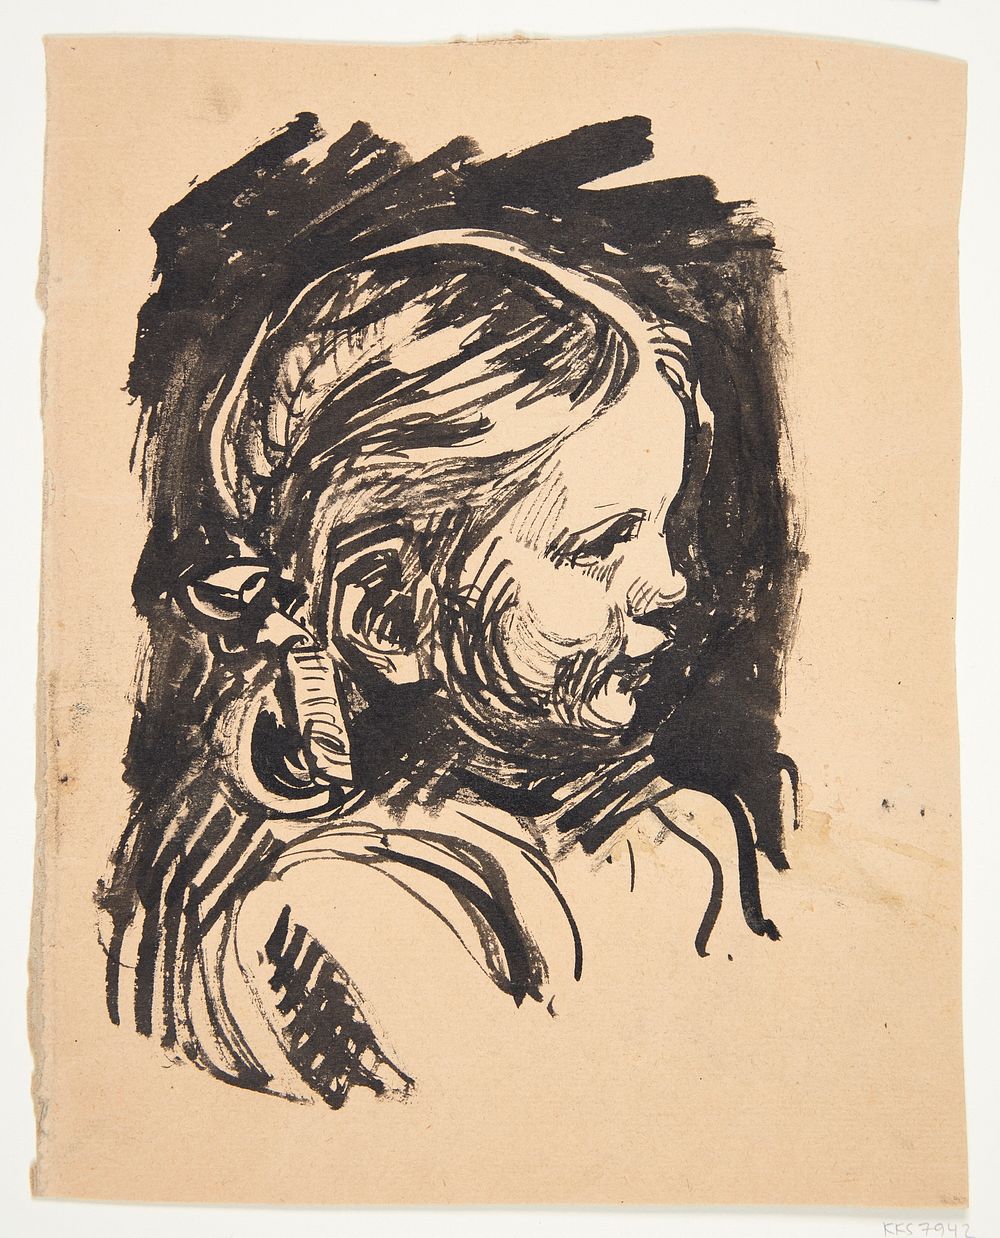 Profile portrait of the artist's daughter "Bimse" by Peter Hansen